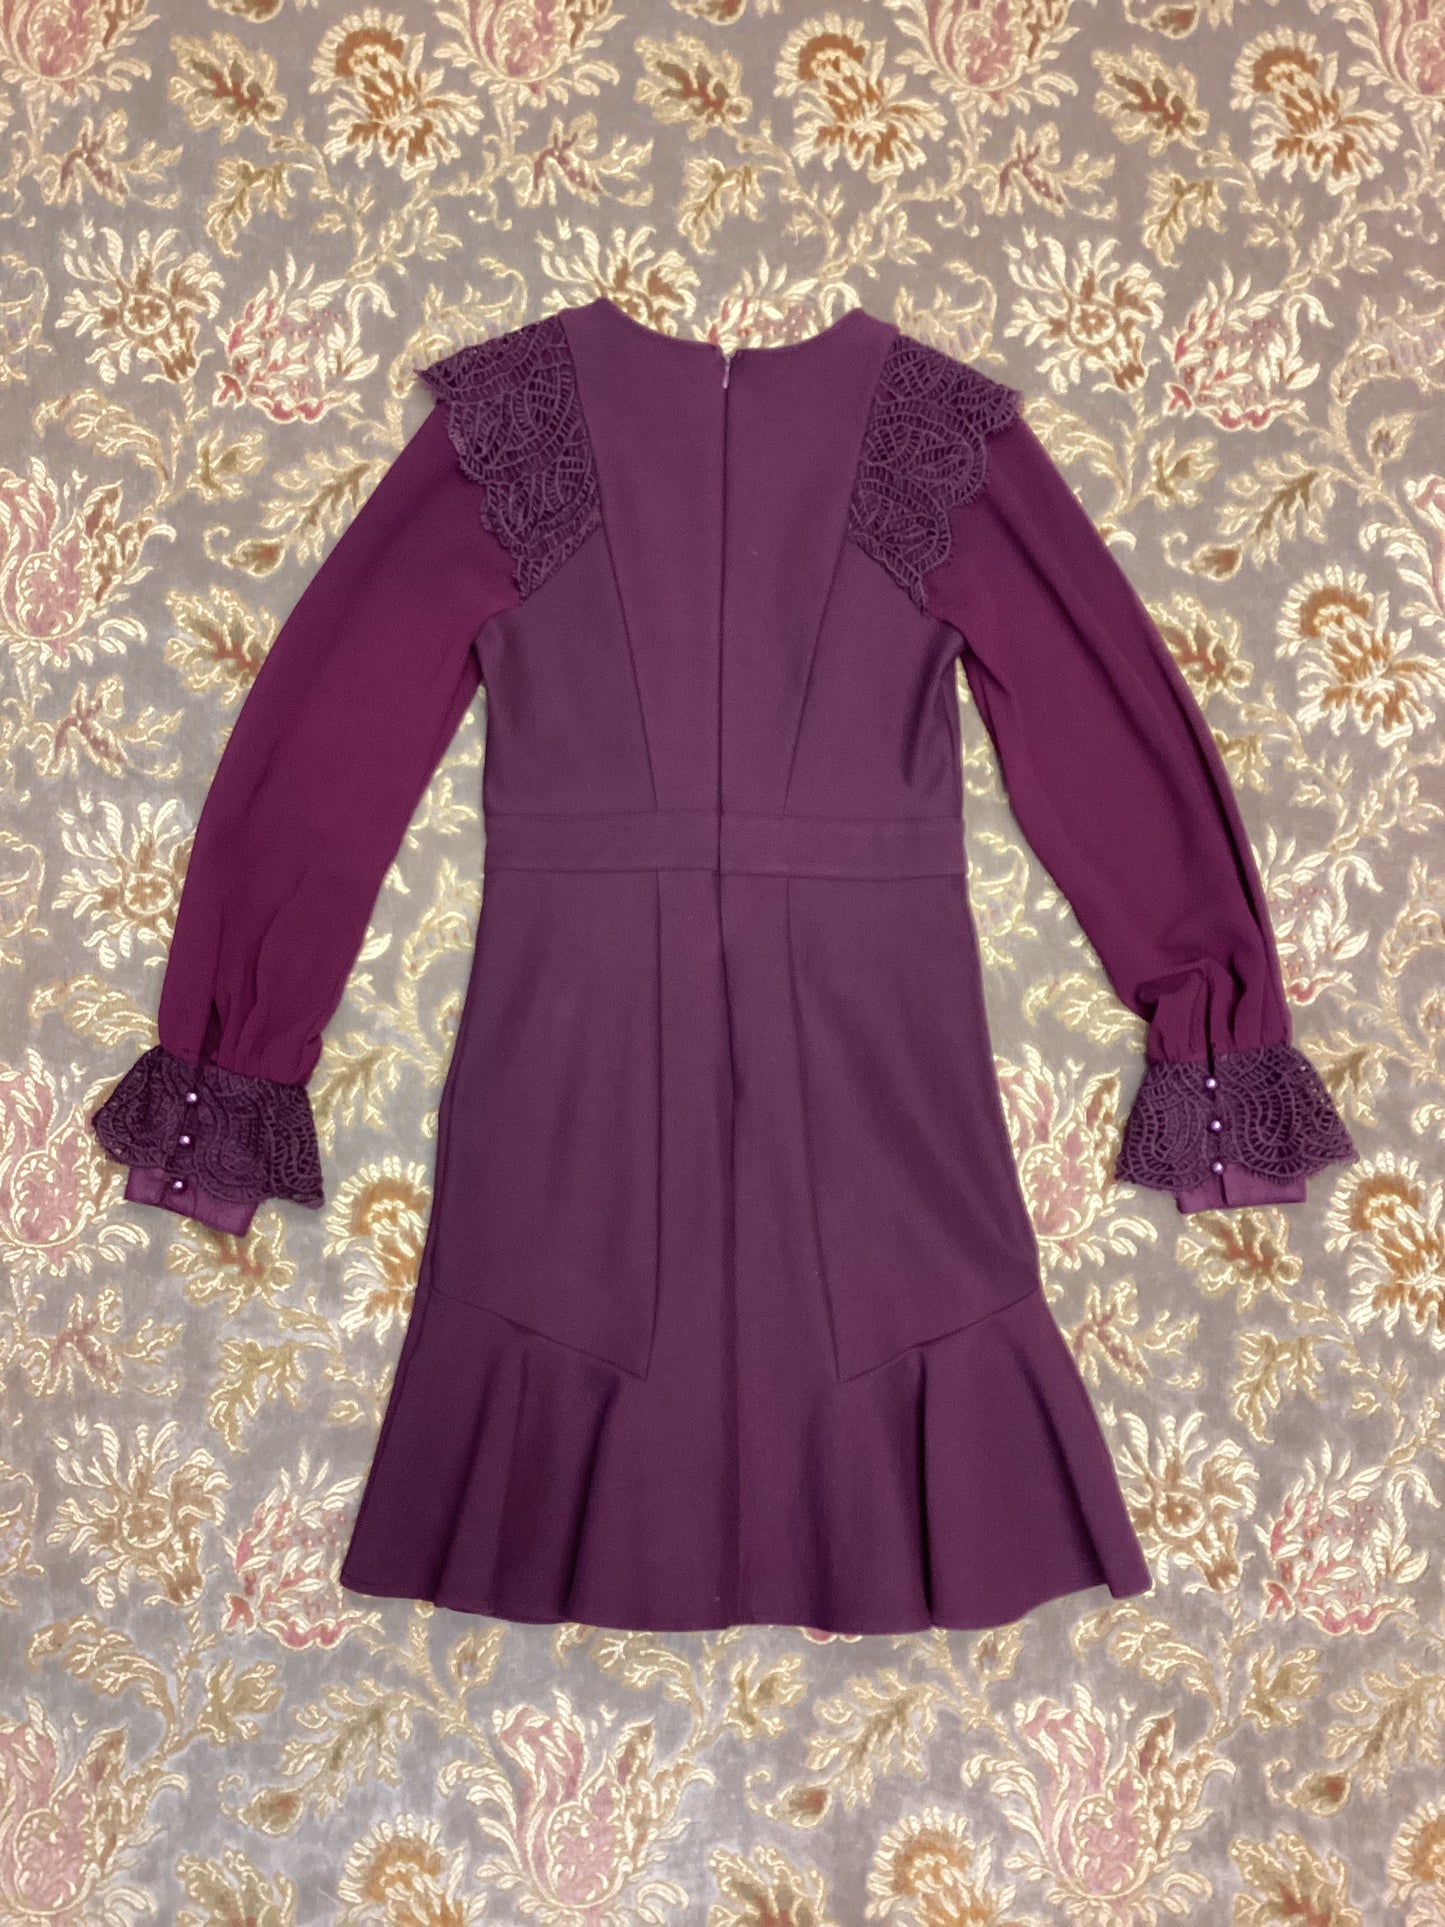 Karen Millen Burgundy Dress Size 8